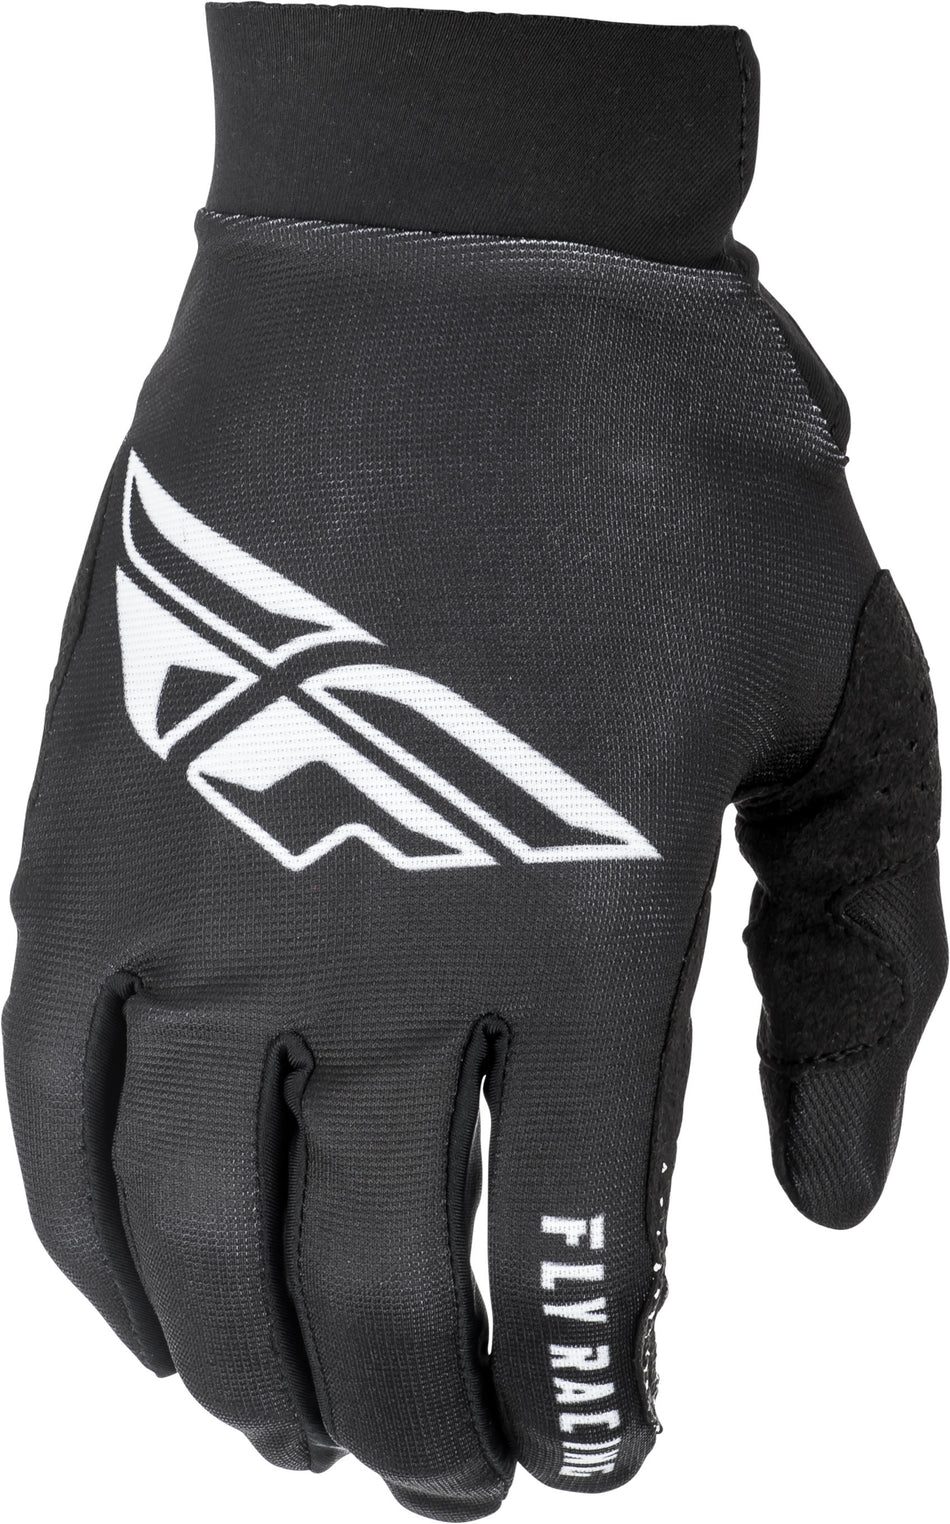 FLY RACING Pro Lite Gloves Black/White Sz 10 372-81010